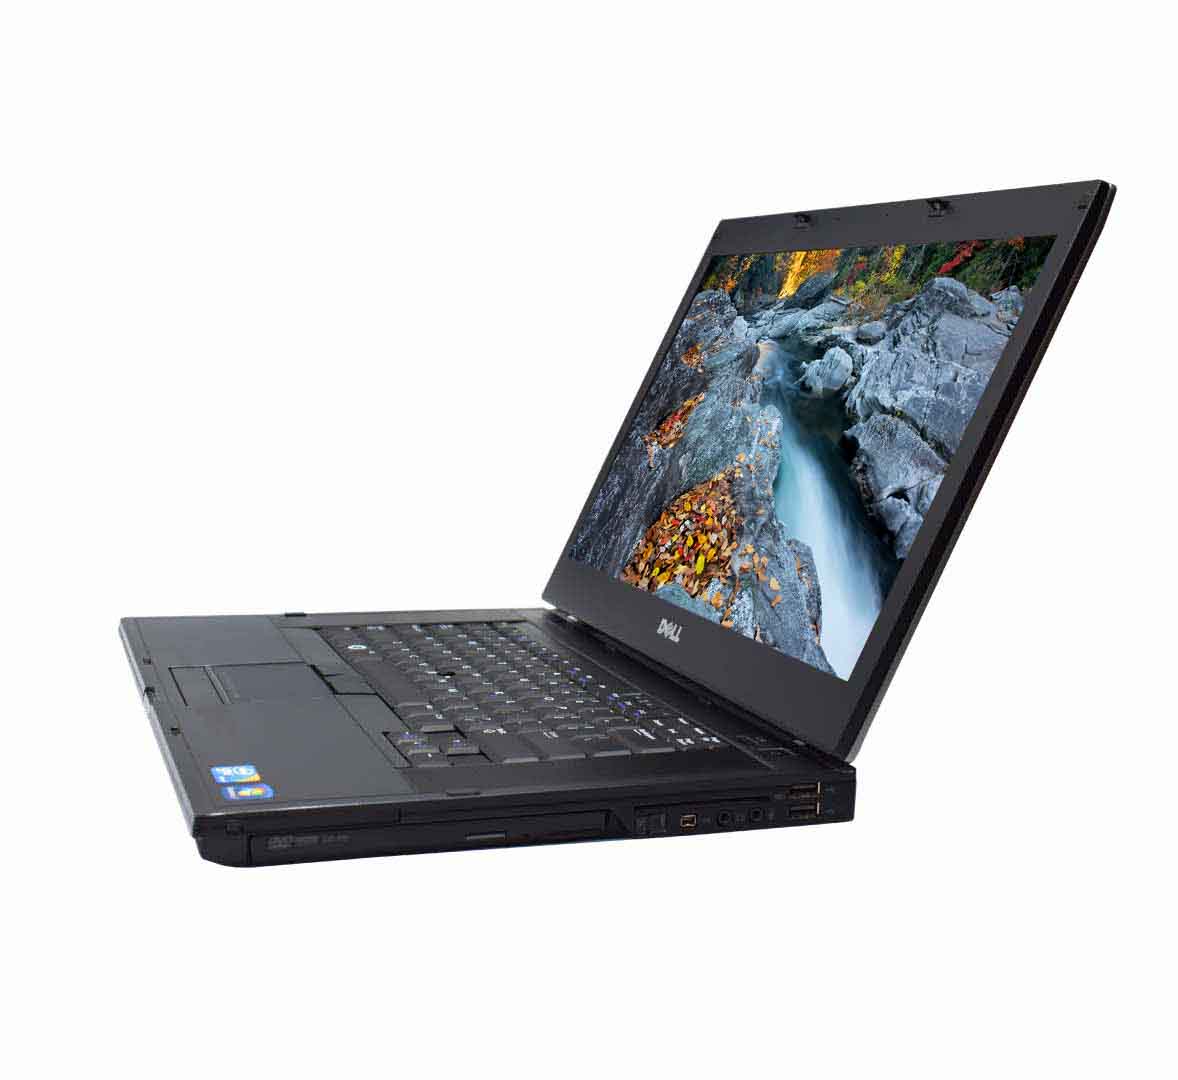 Dell Latitude E6510 Business Laptop, Intel Core i5-1st Generation CPU, 4GB RAM, 500GB HDD, 15.6 inch Display, Windows 10 Pro, Refurbished Laptop